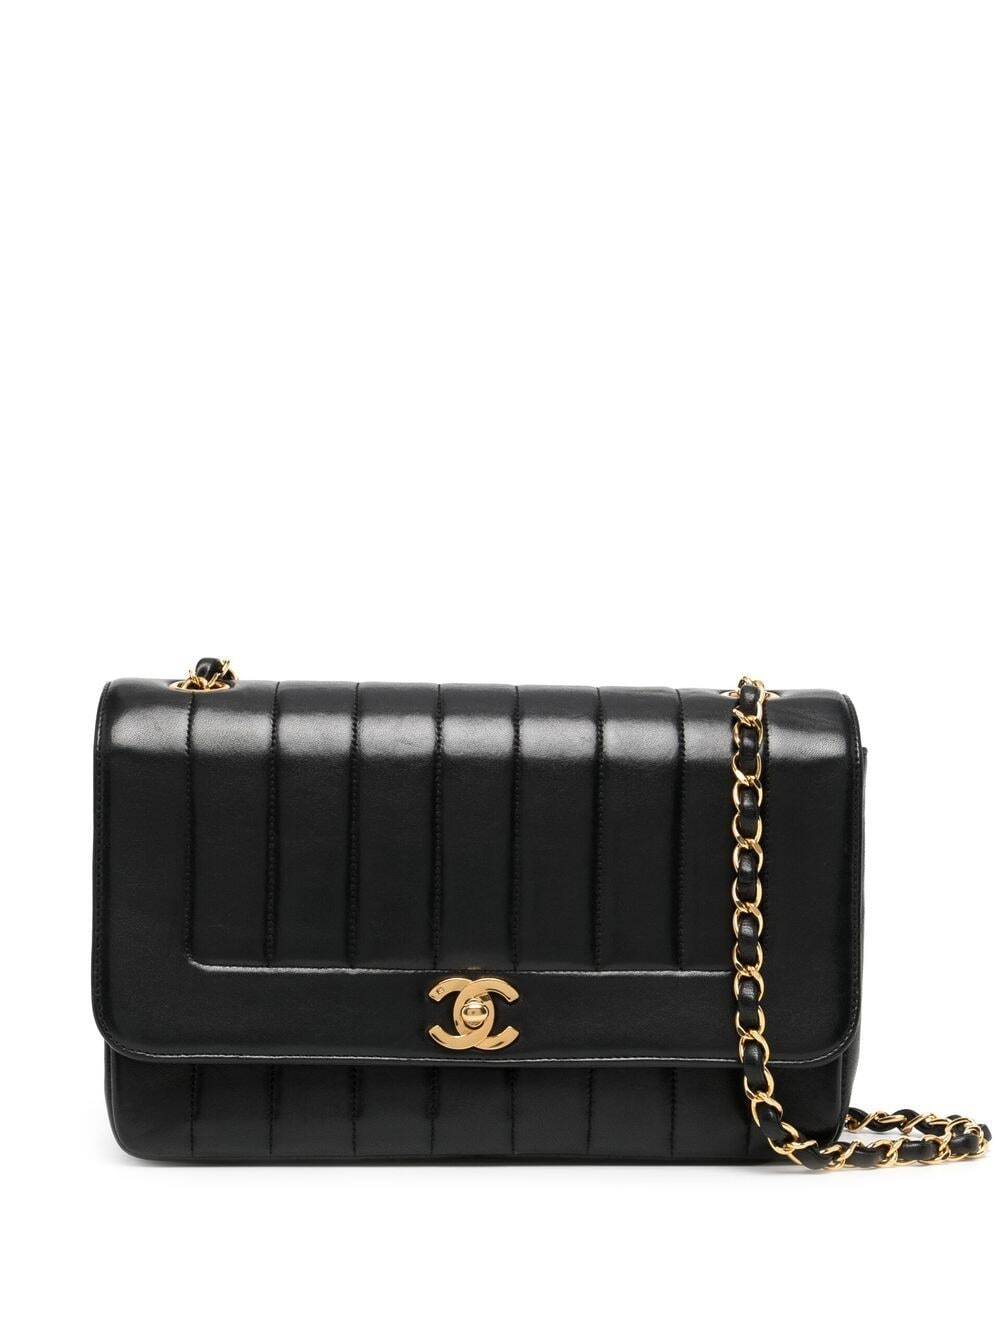 Chanel Pre-Owned 1997 Mademoiselle Classic Flap shoulder bag - Black